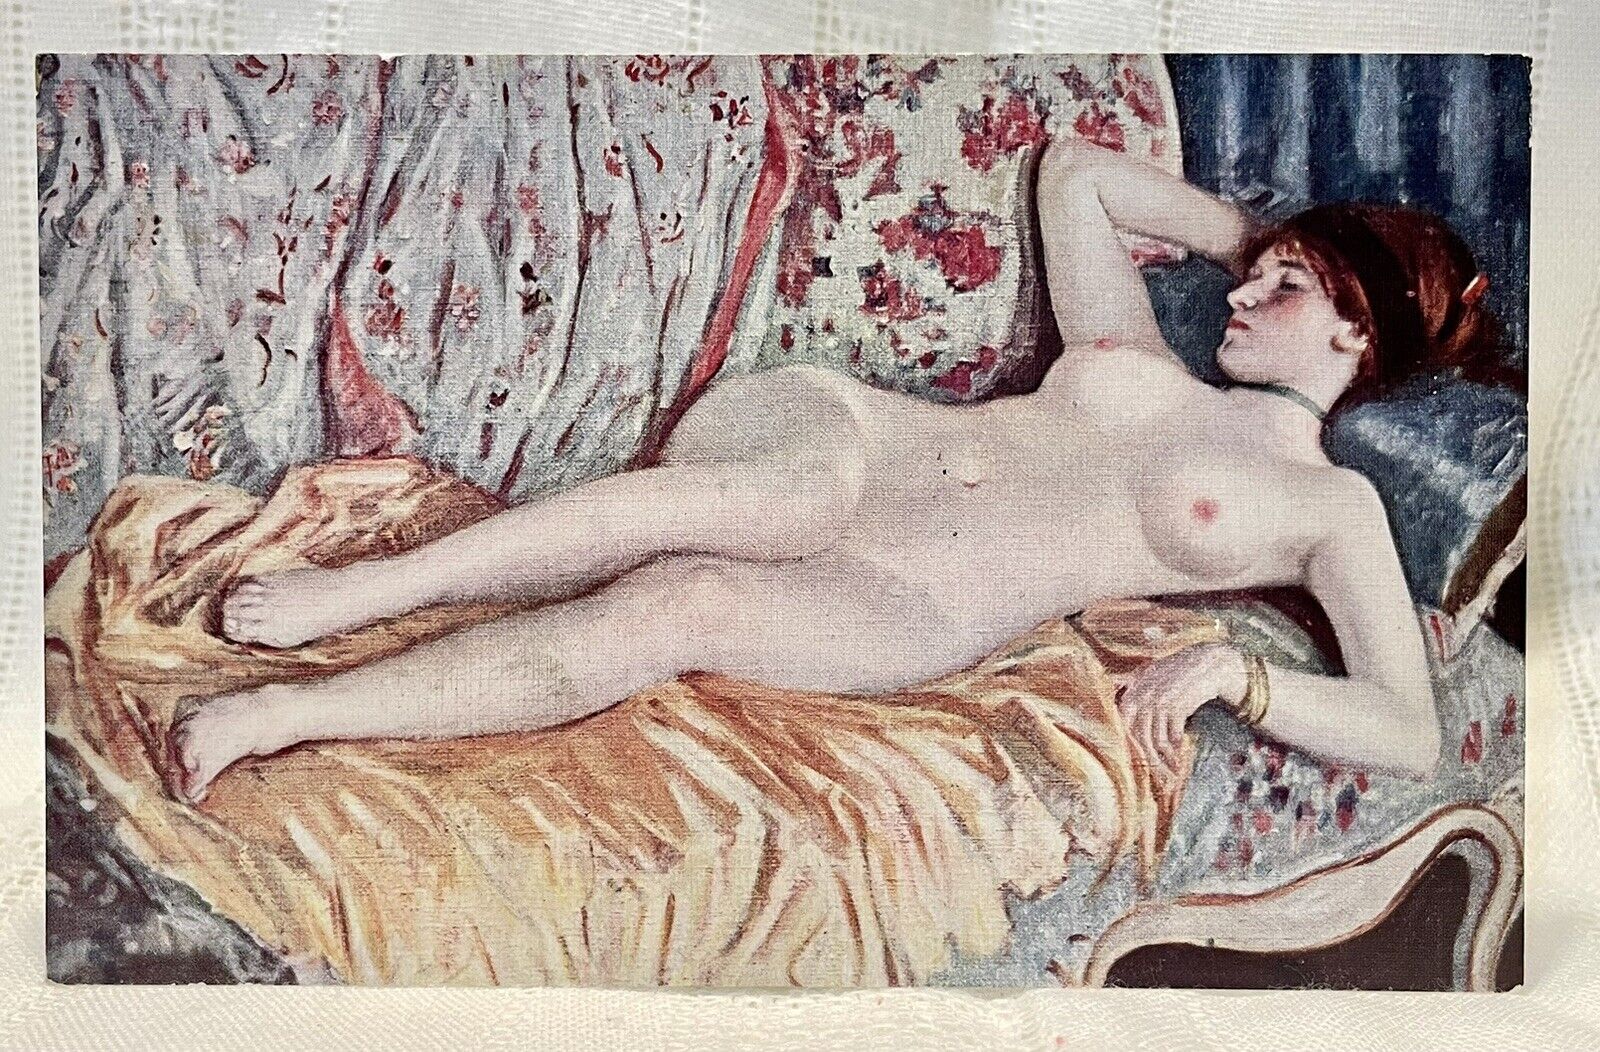 American Artist F. Frieseke | MUJER DORMIDA | Nude Woman Sleeping | Salon de